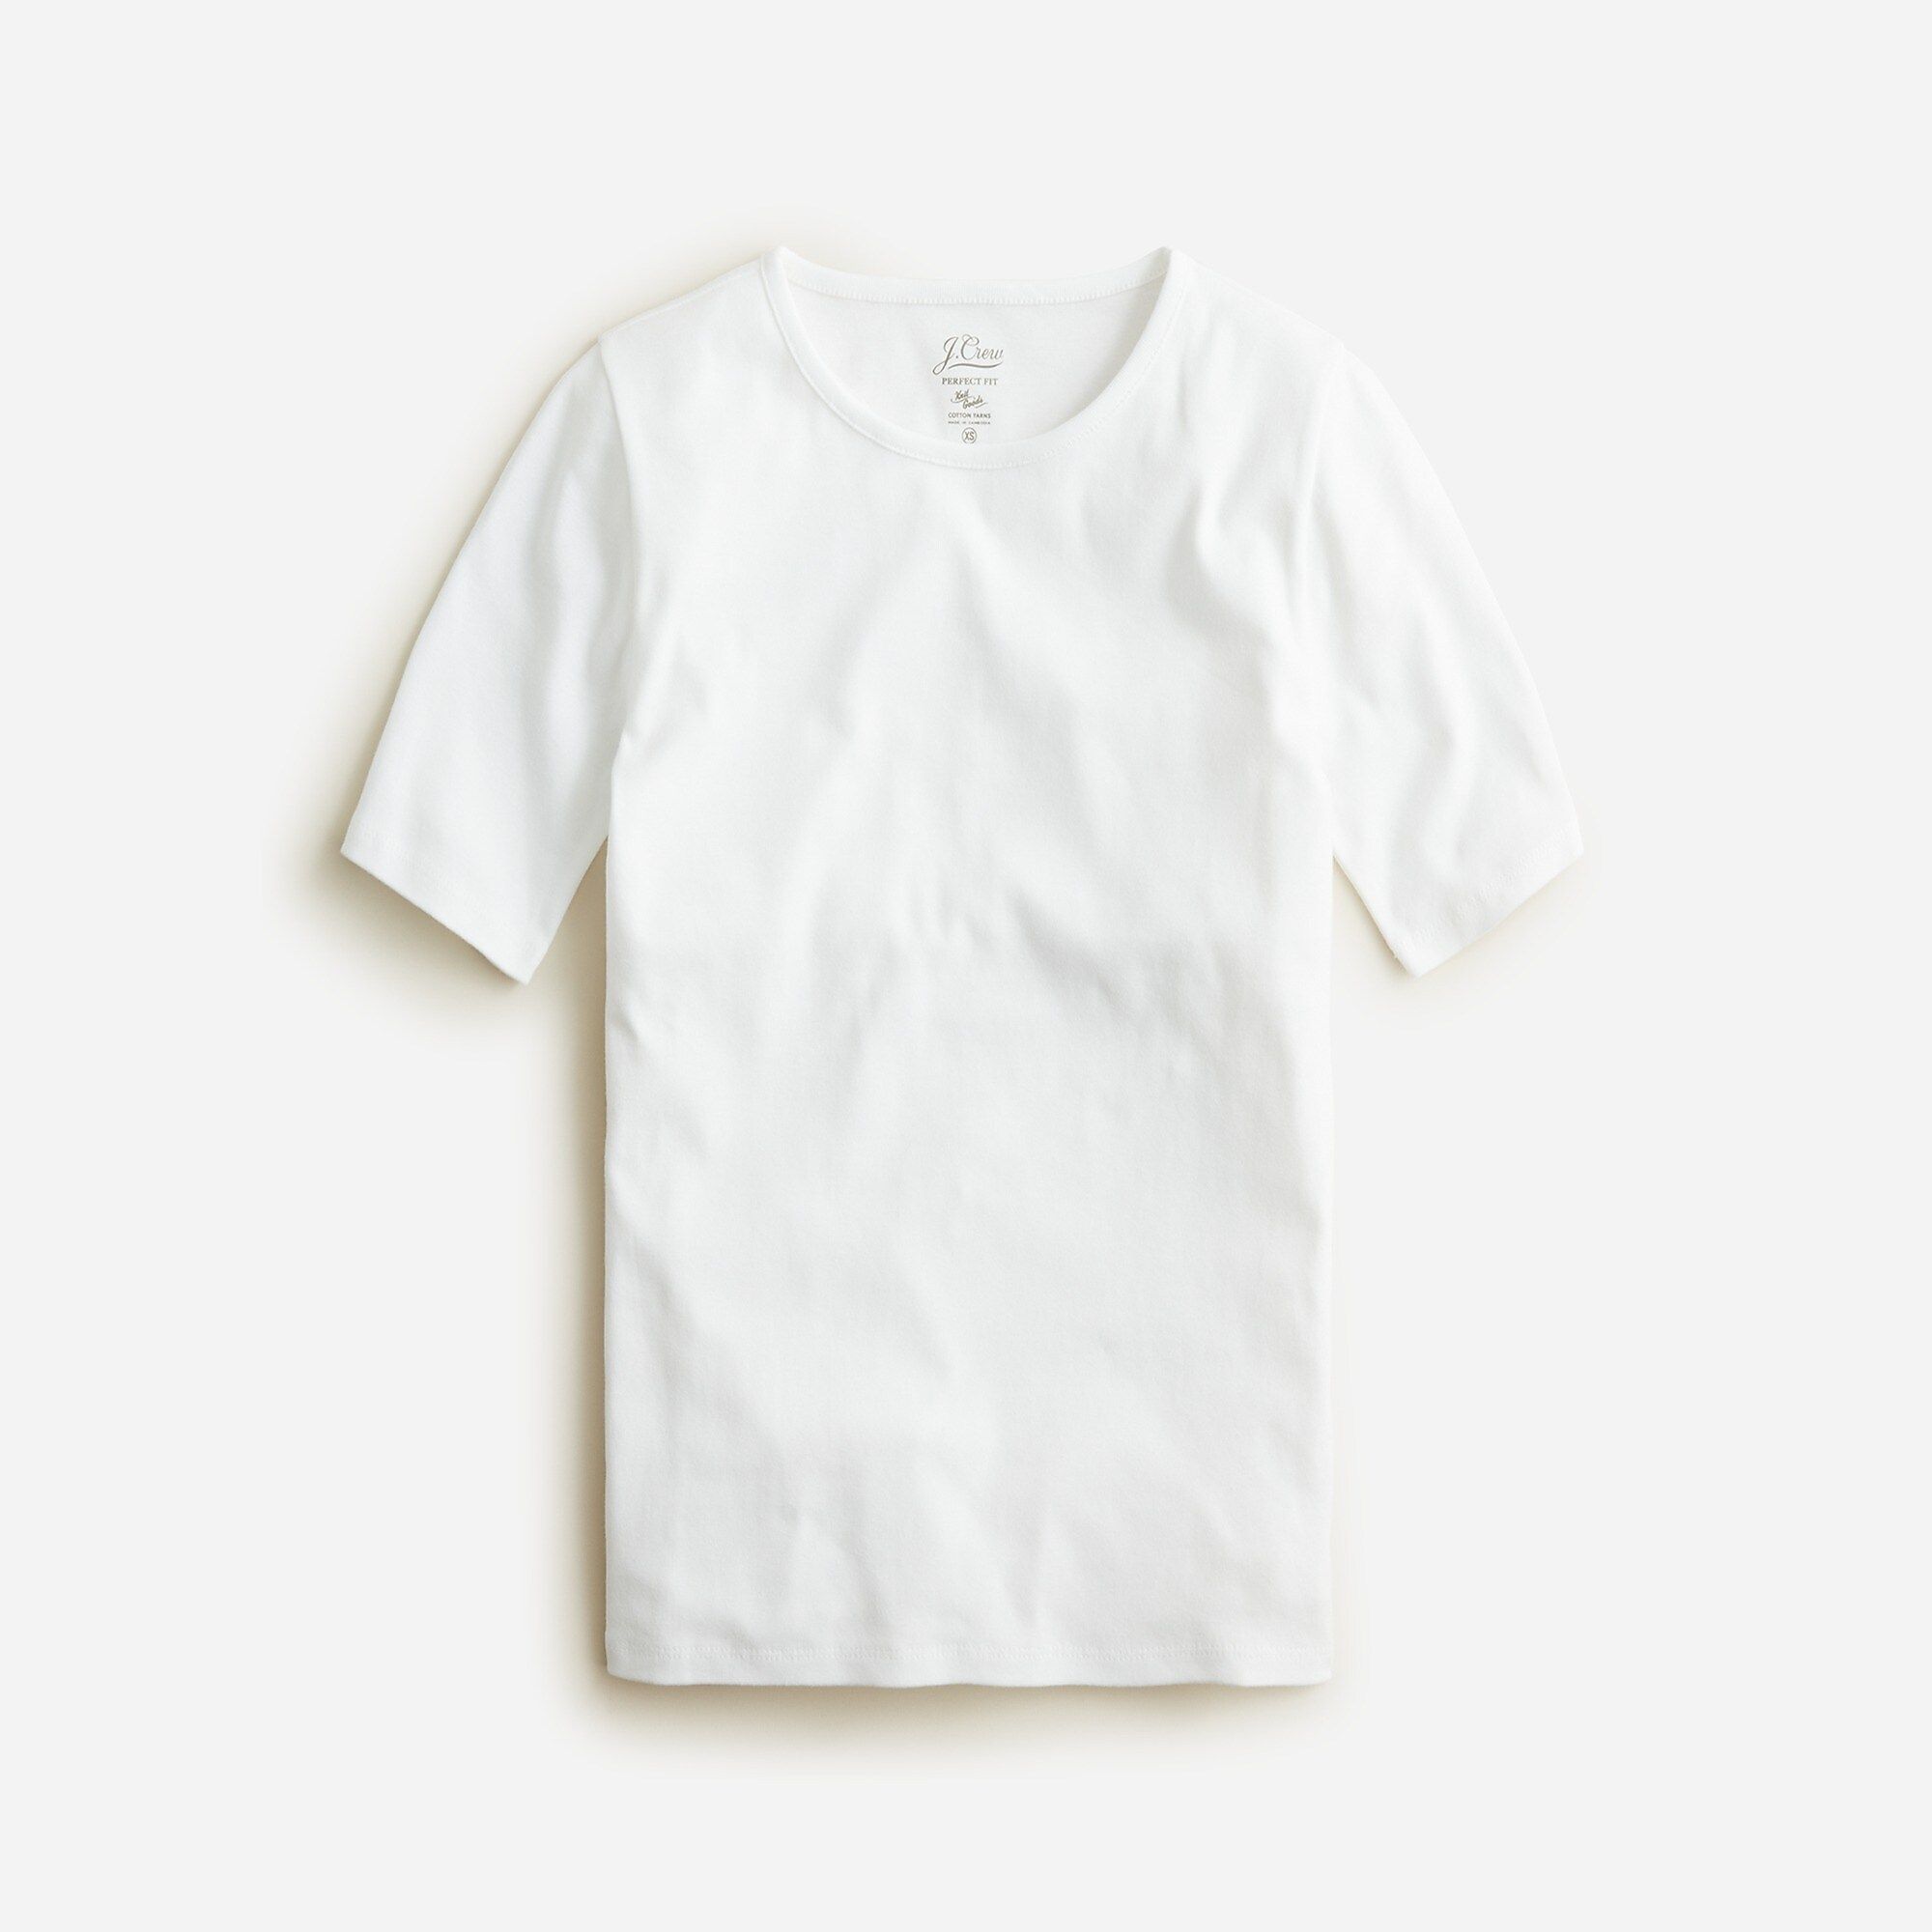 Slim perfect T-shirt
Item BF355

 20 REVIEWS
 | J.Crew US